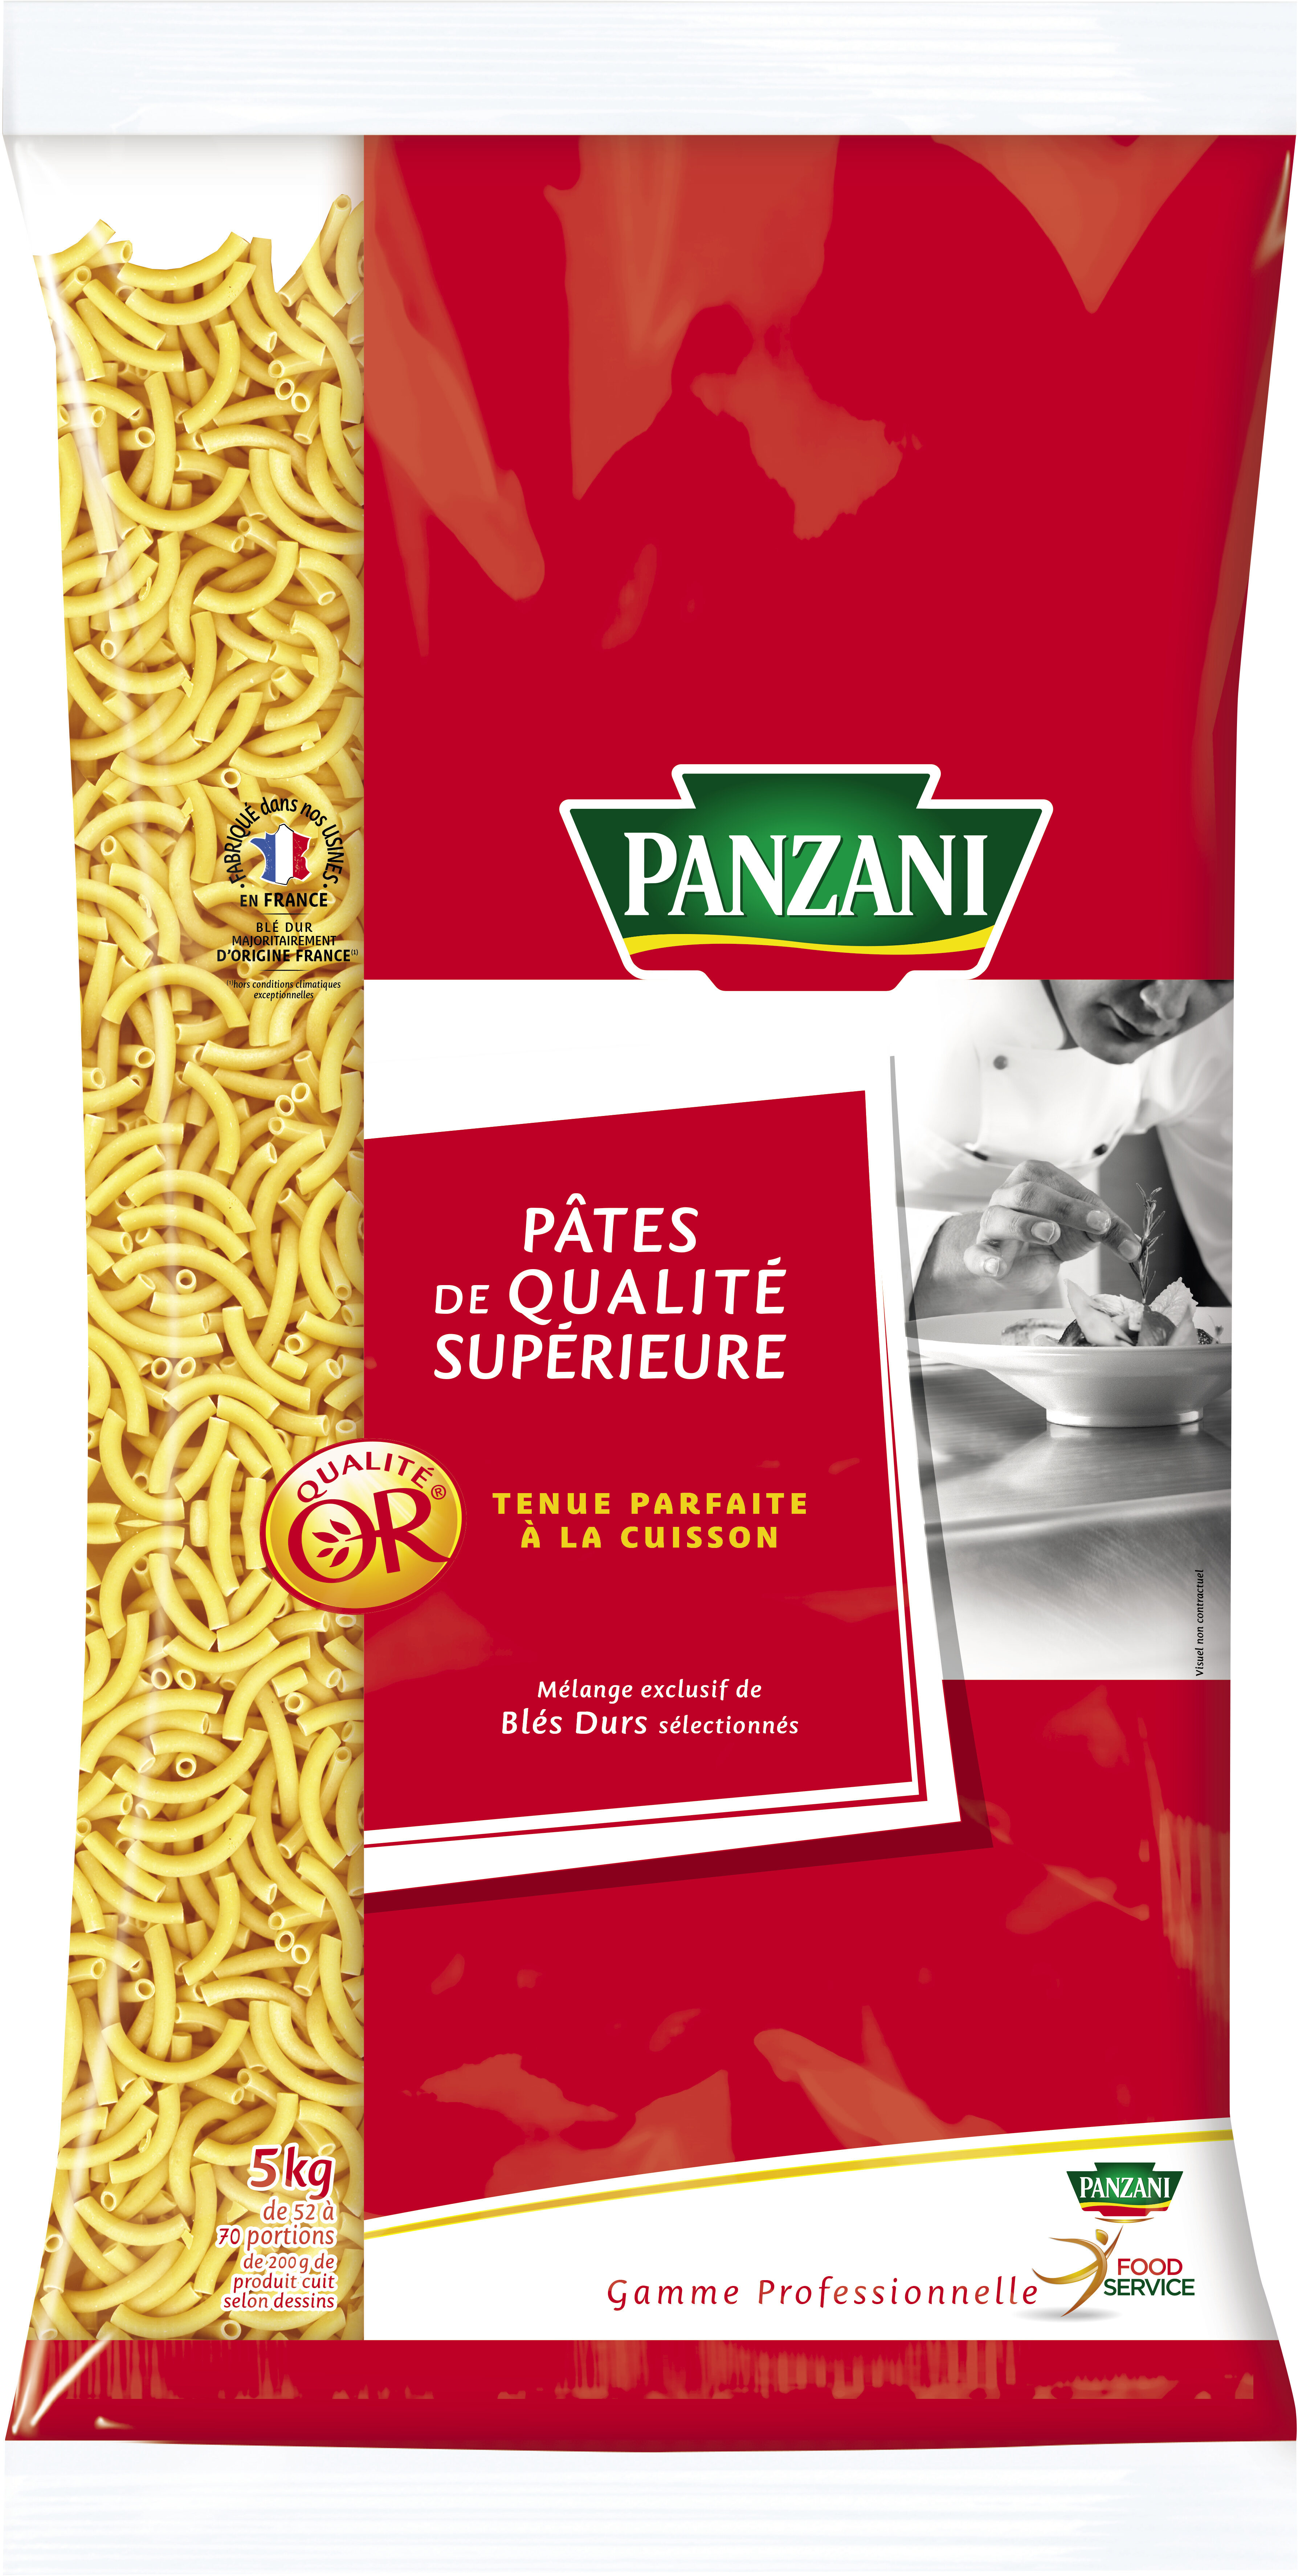 Panzani macaroni qualité supérieure 5kg - Product - fr